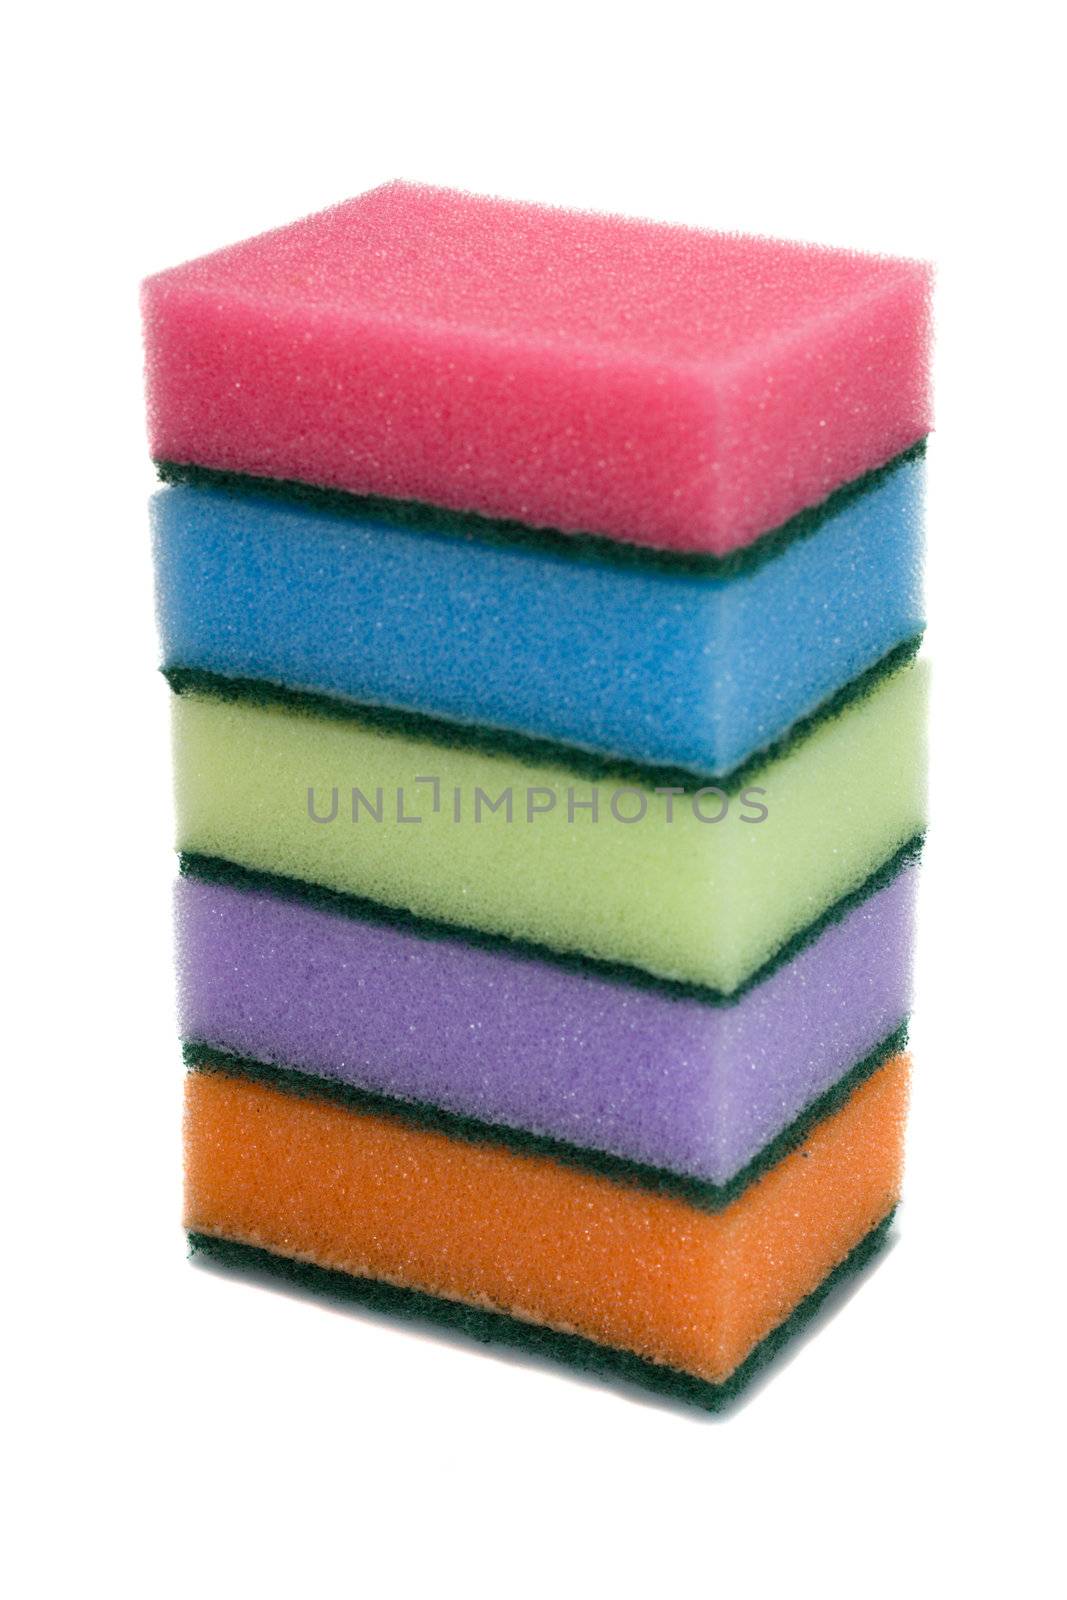 five colored sponges by Alekcey